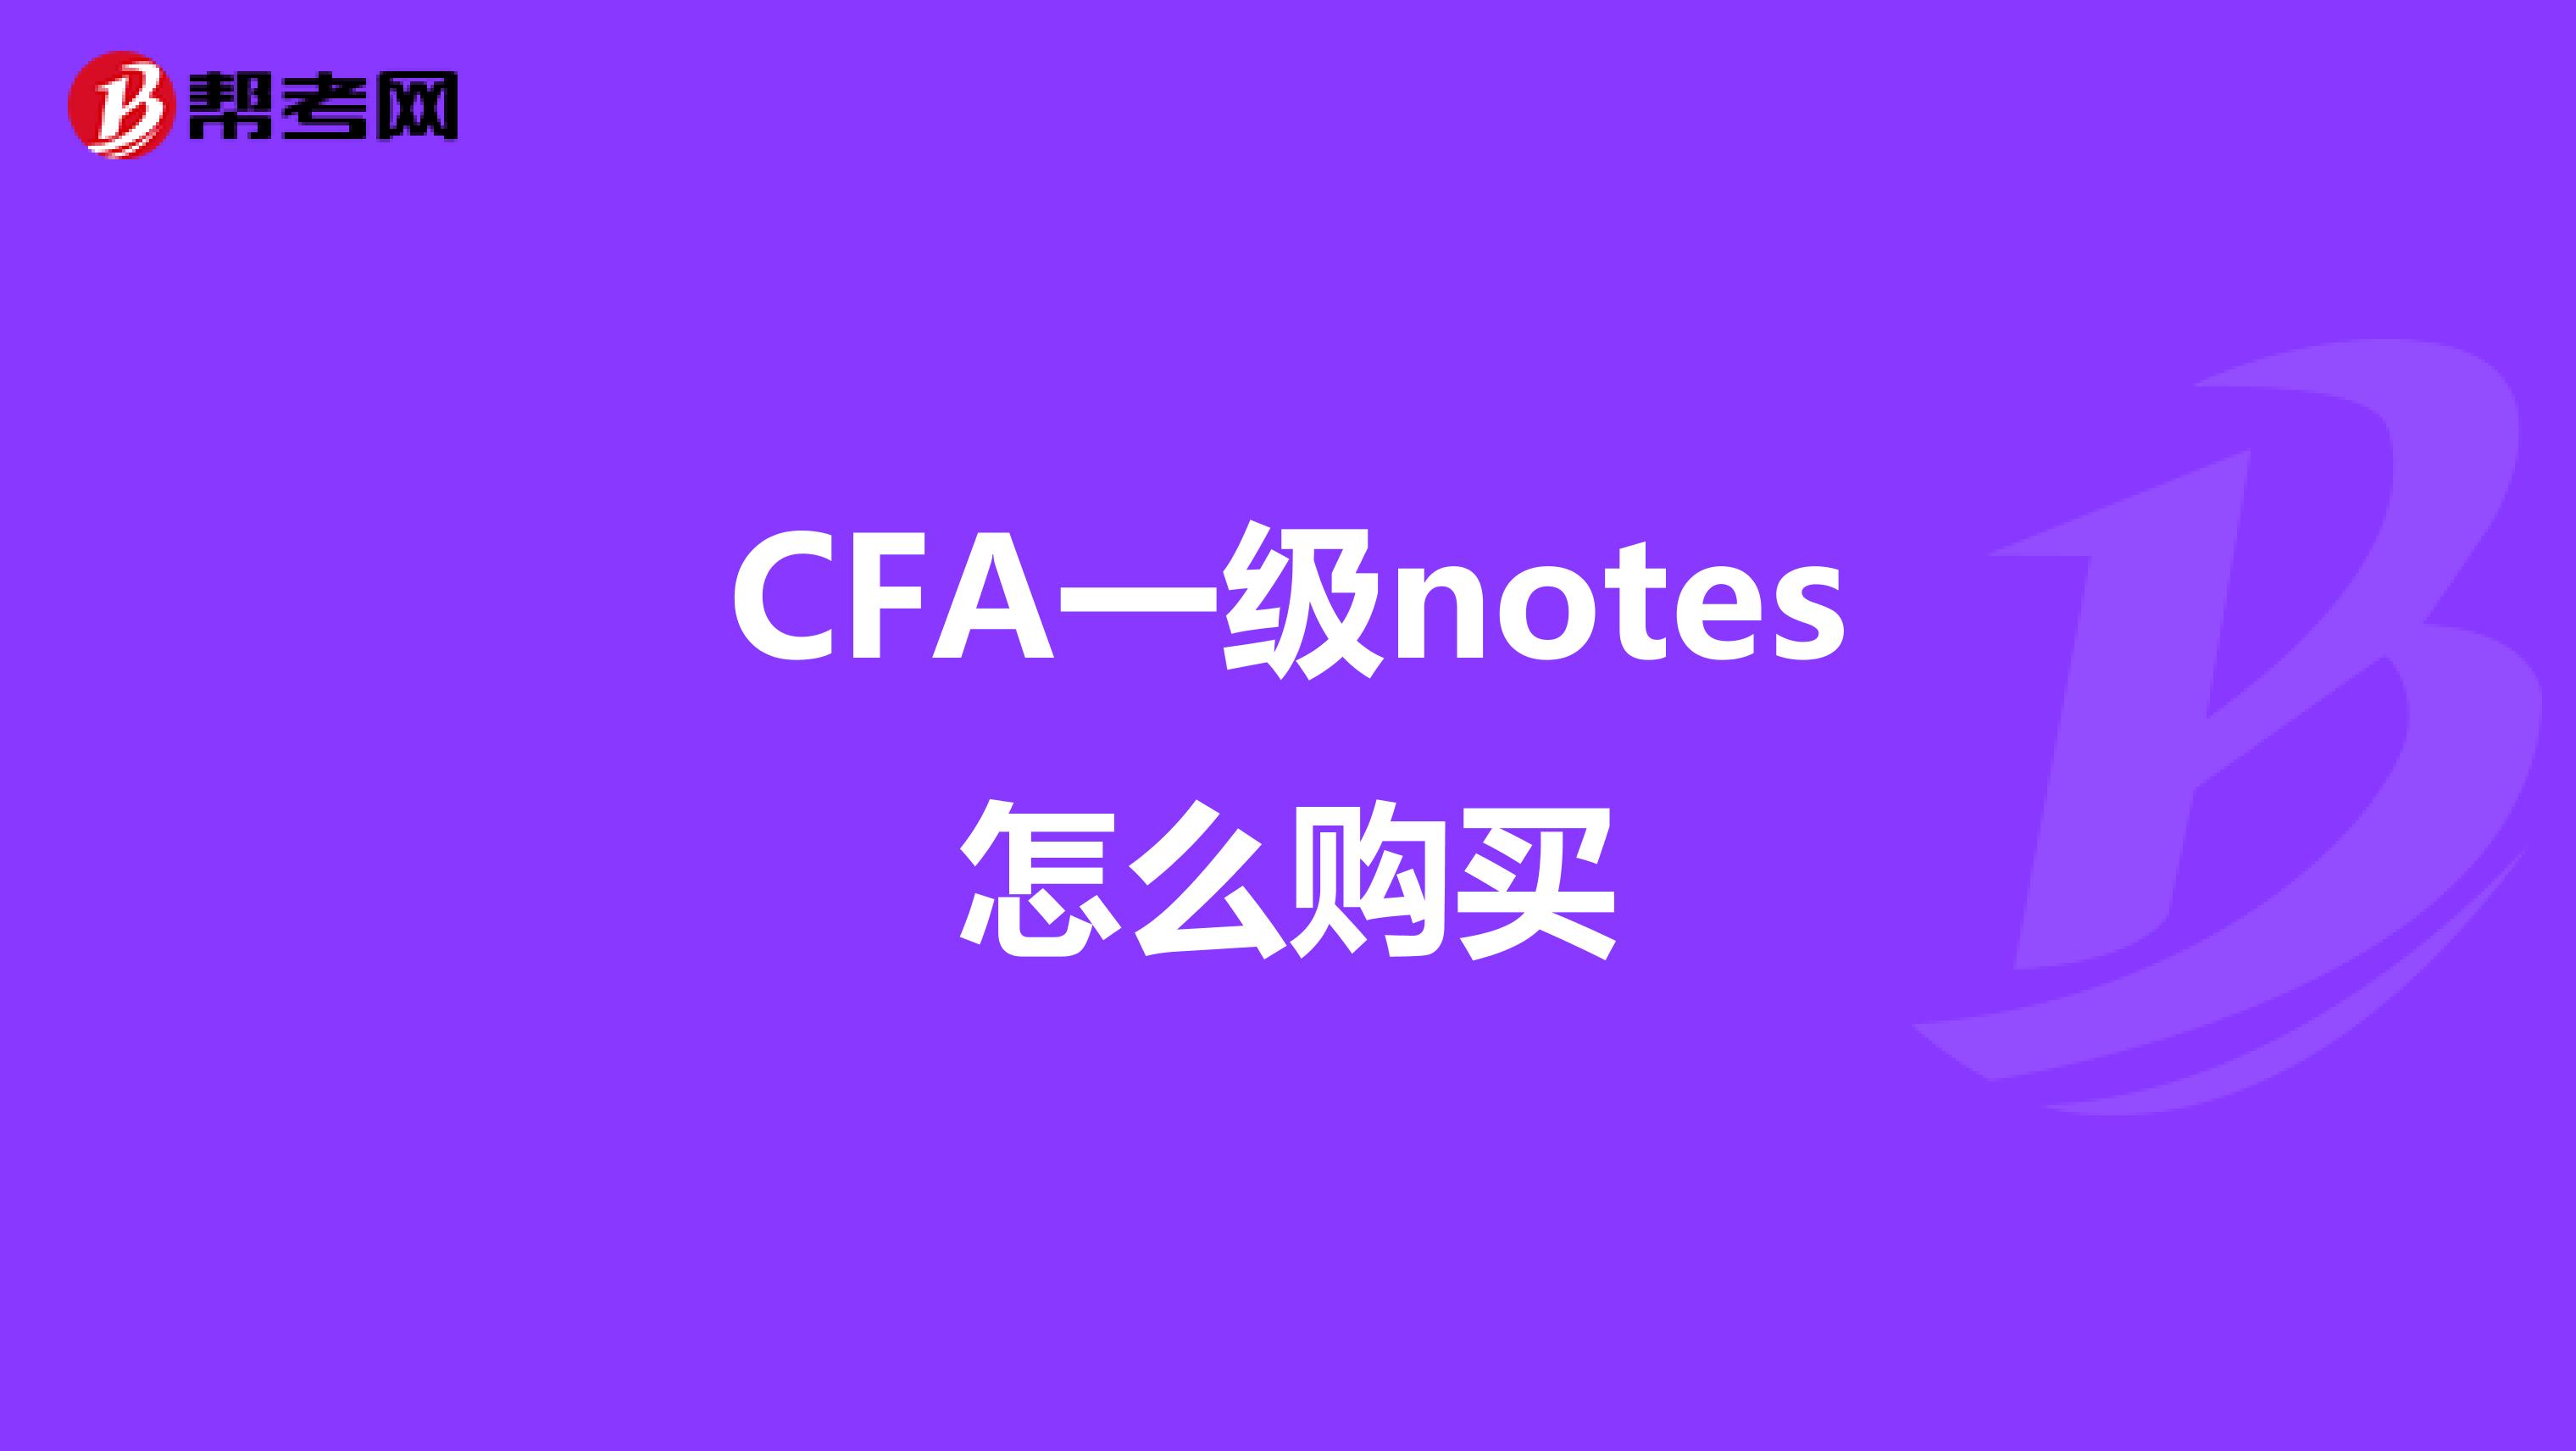 CFA一级notes怎么购买